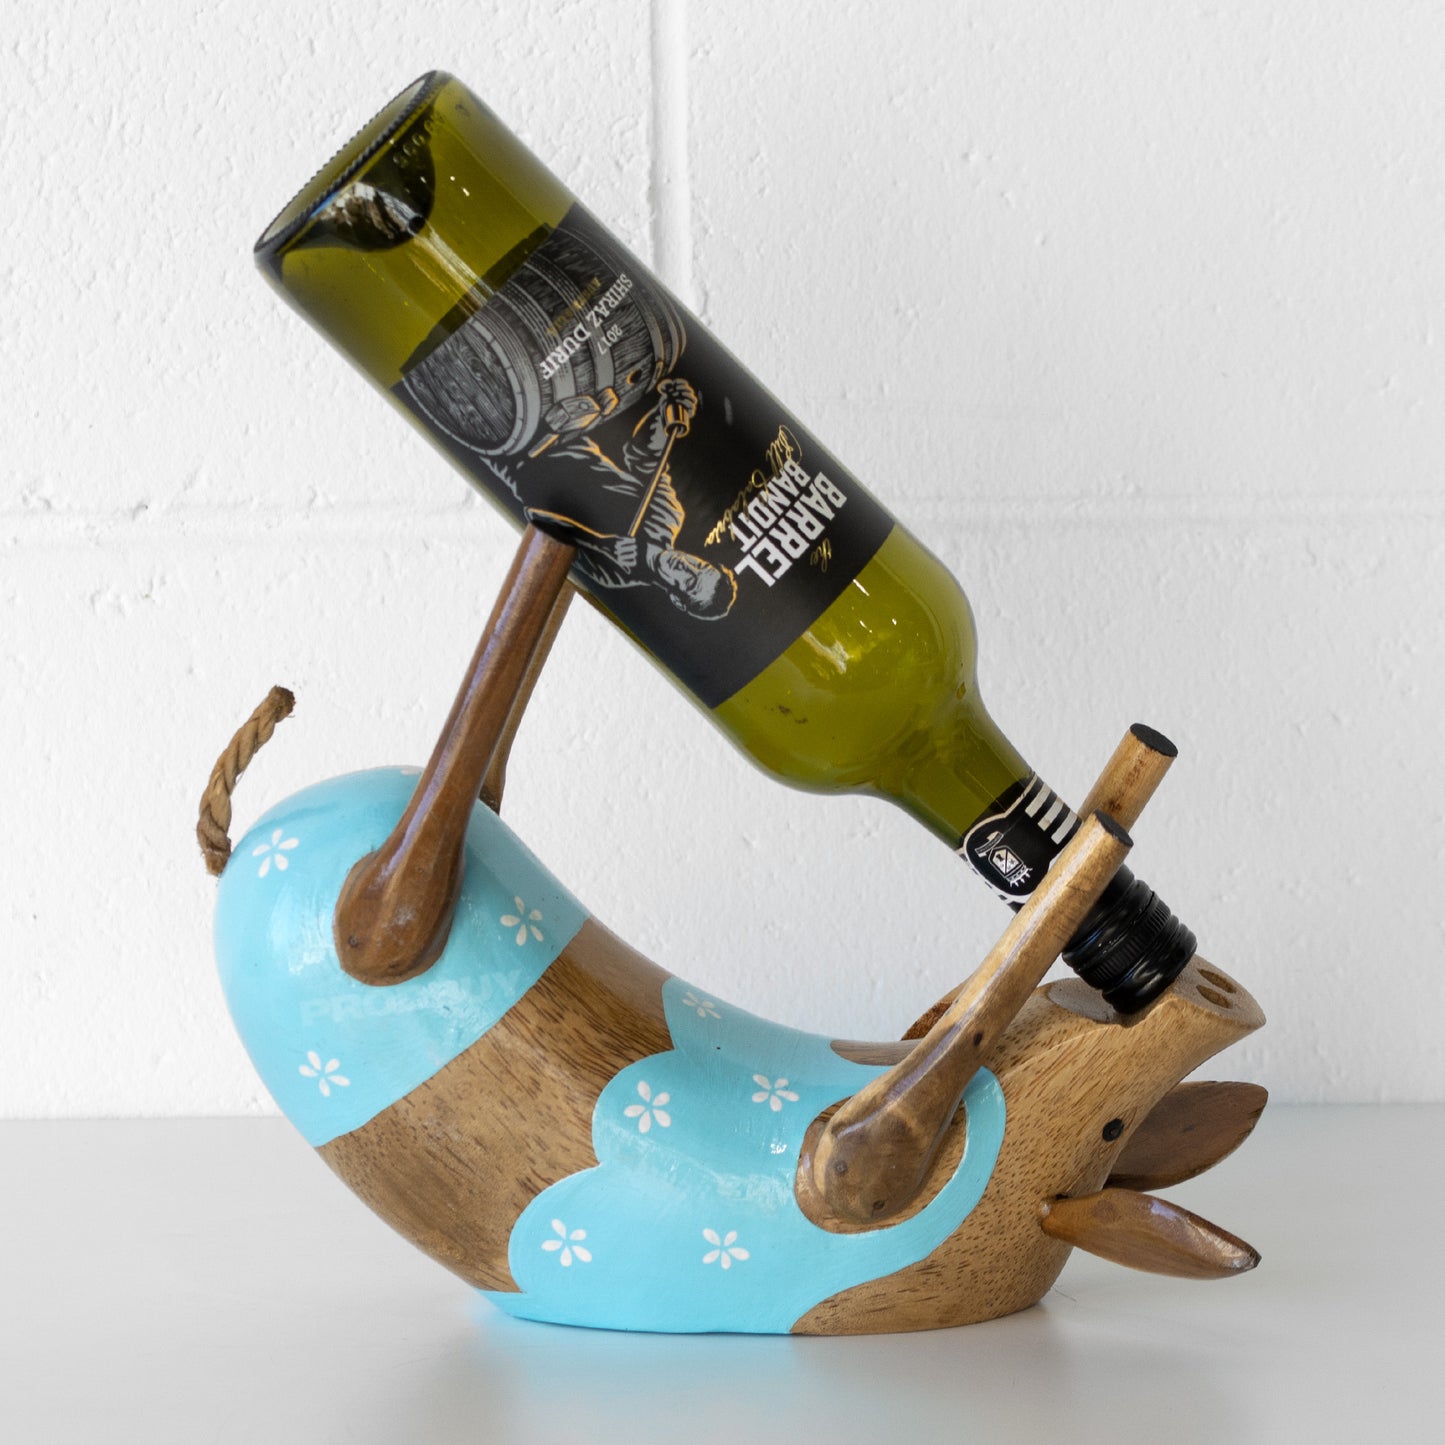 Drunken Blue Pig Wooden Wine Bottle Holder Ornament